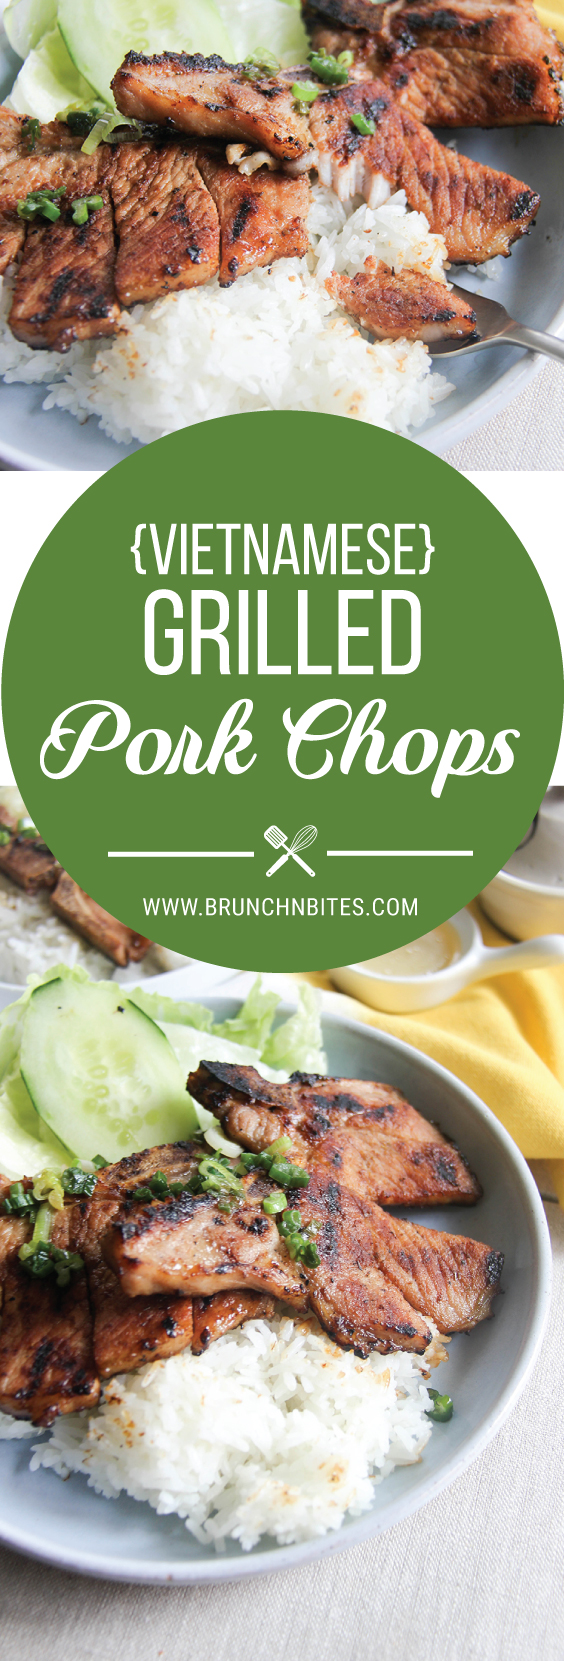 Vietnamese Grilled pork Chops | www.brunchnbites.com